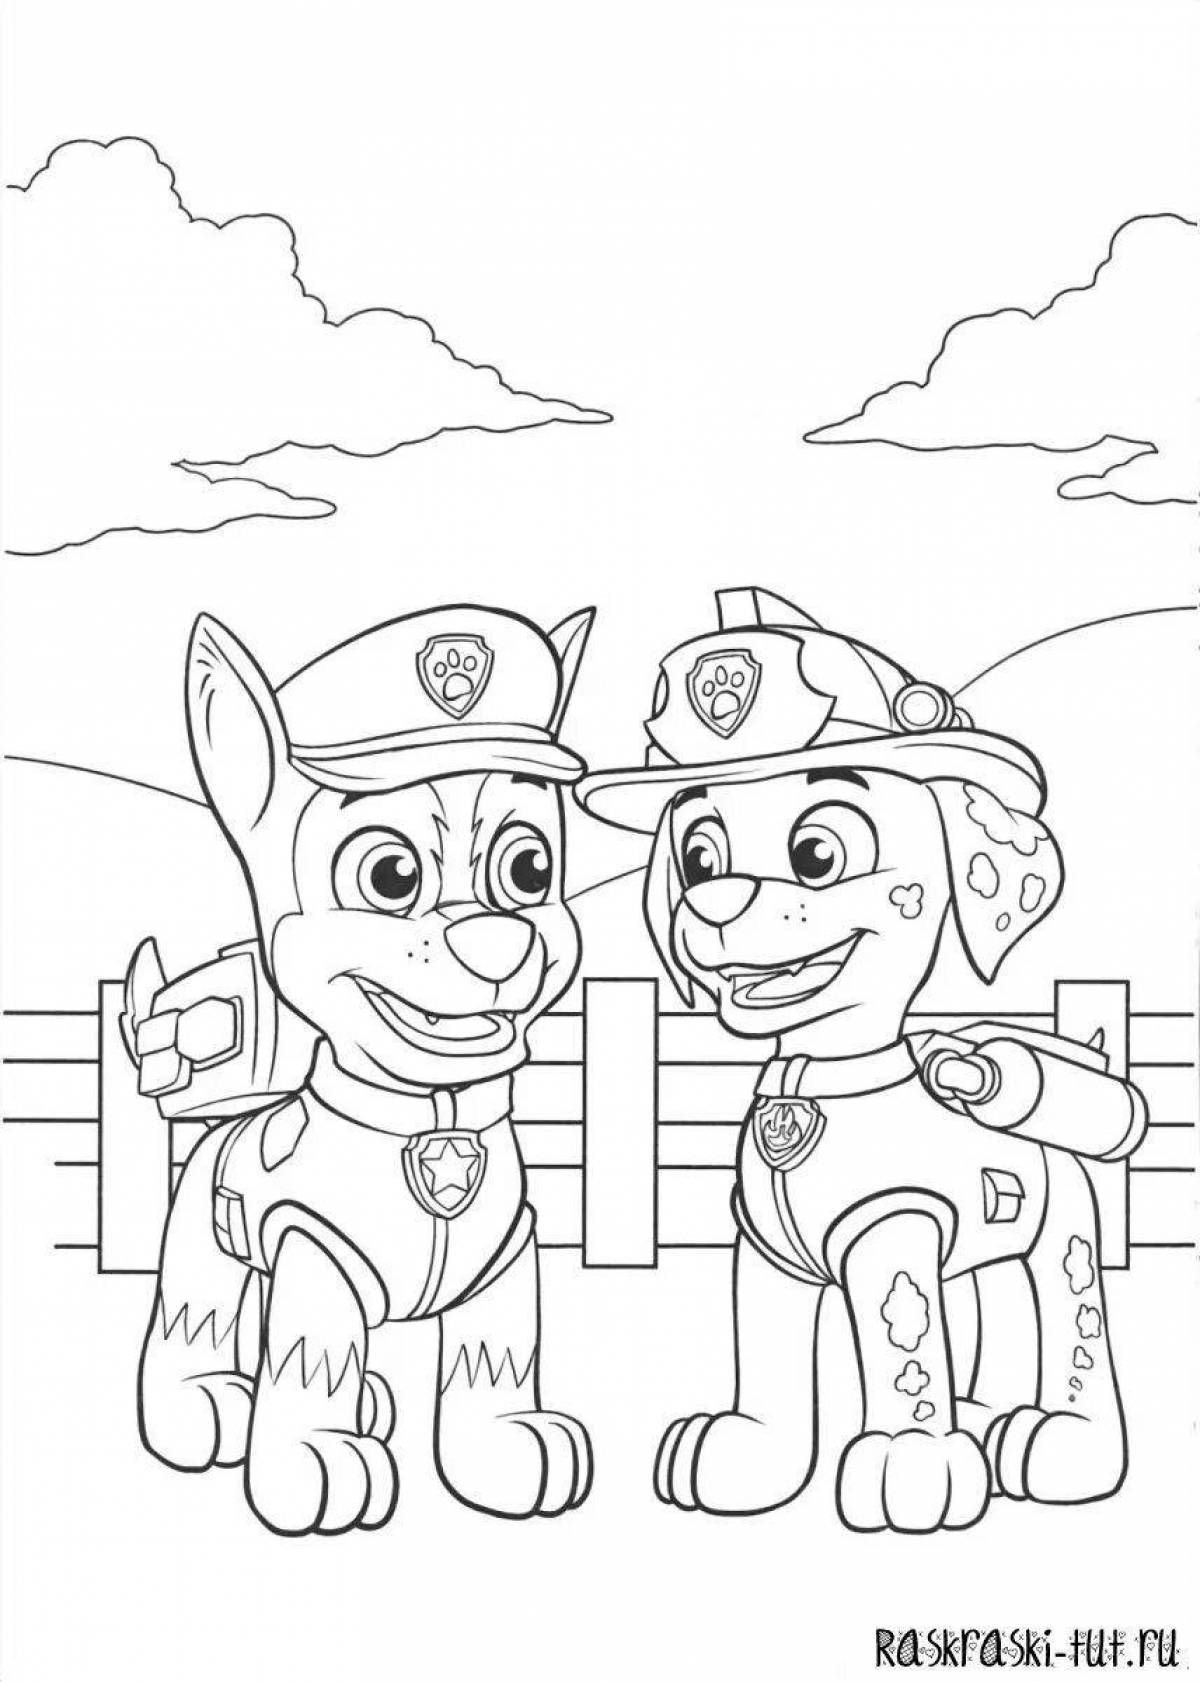 Paw patrol cartoon coloring book